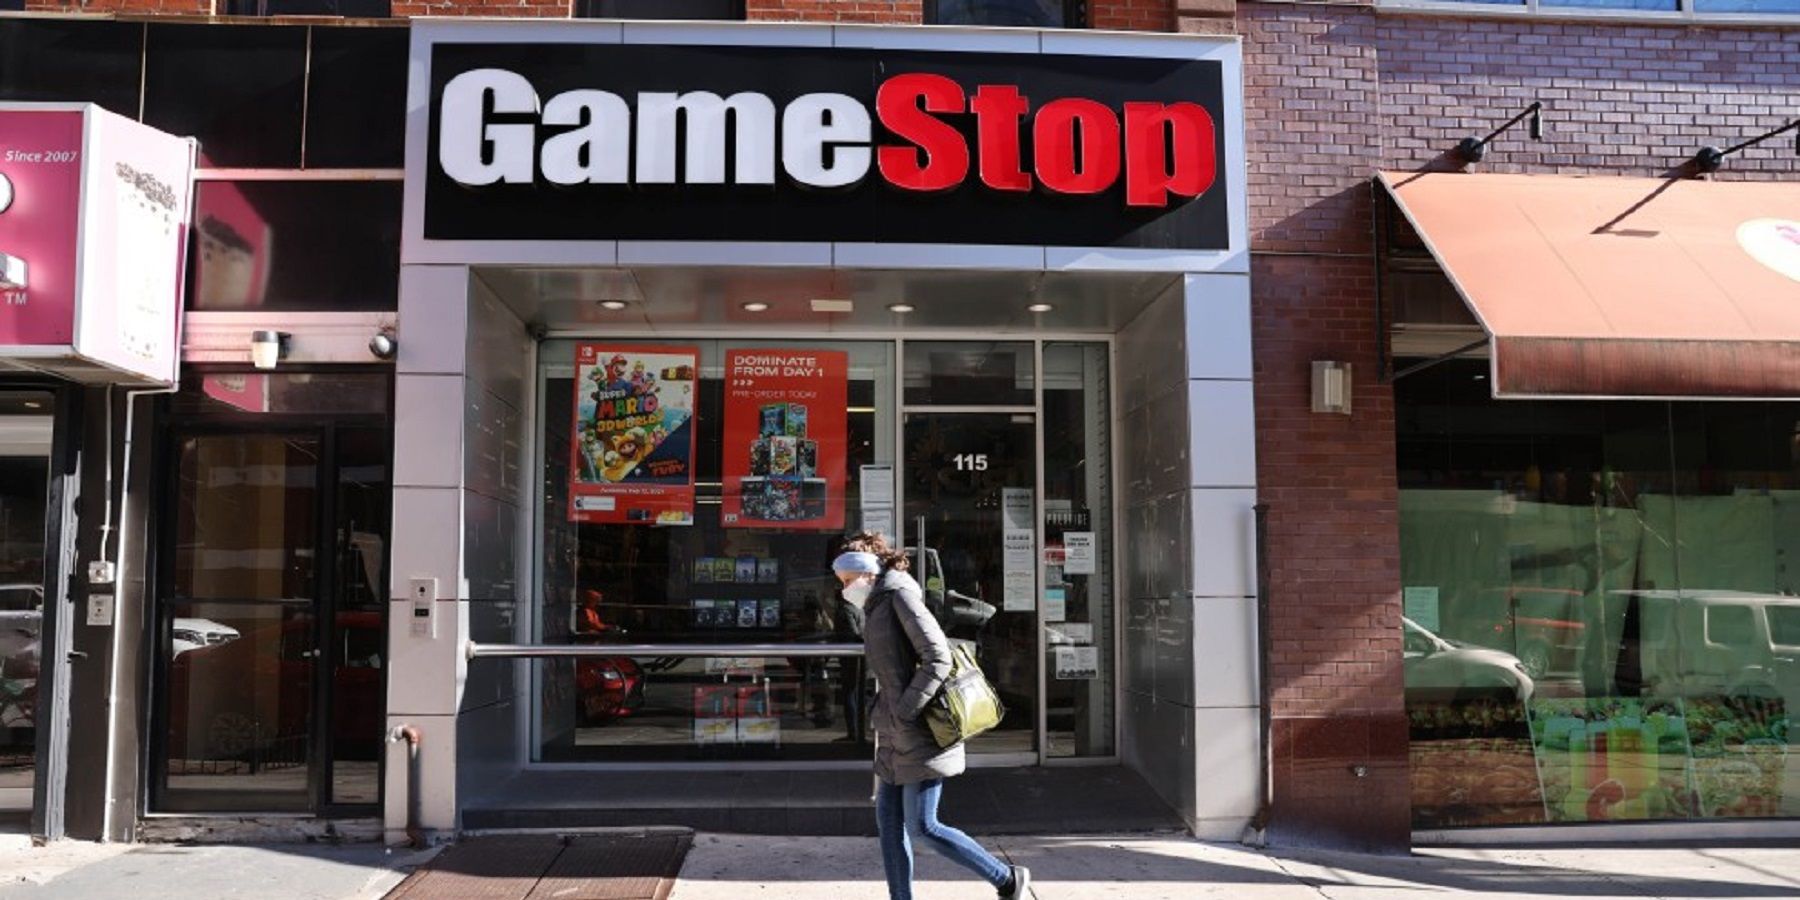 gamestop storefront feature